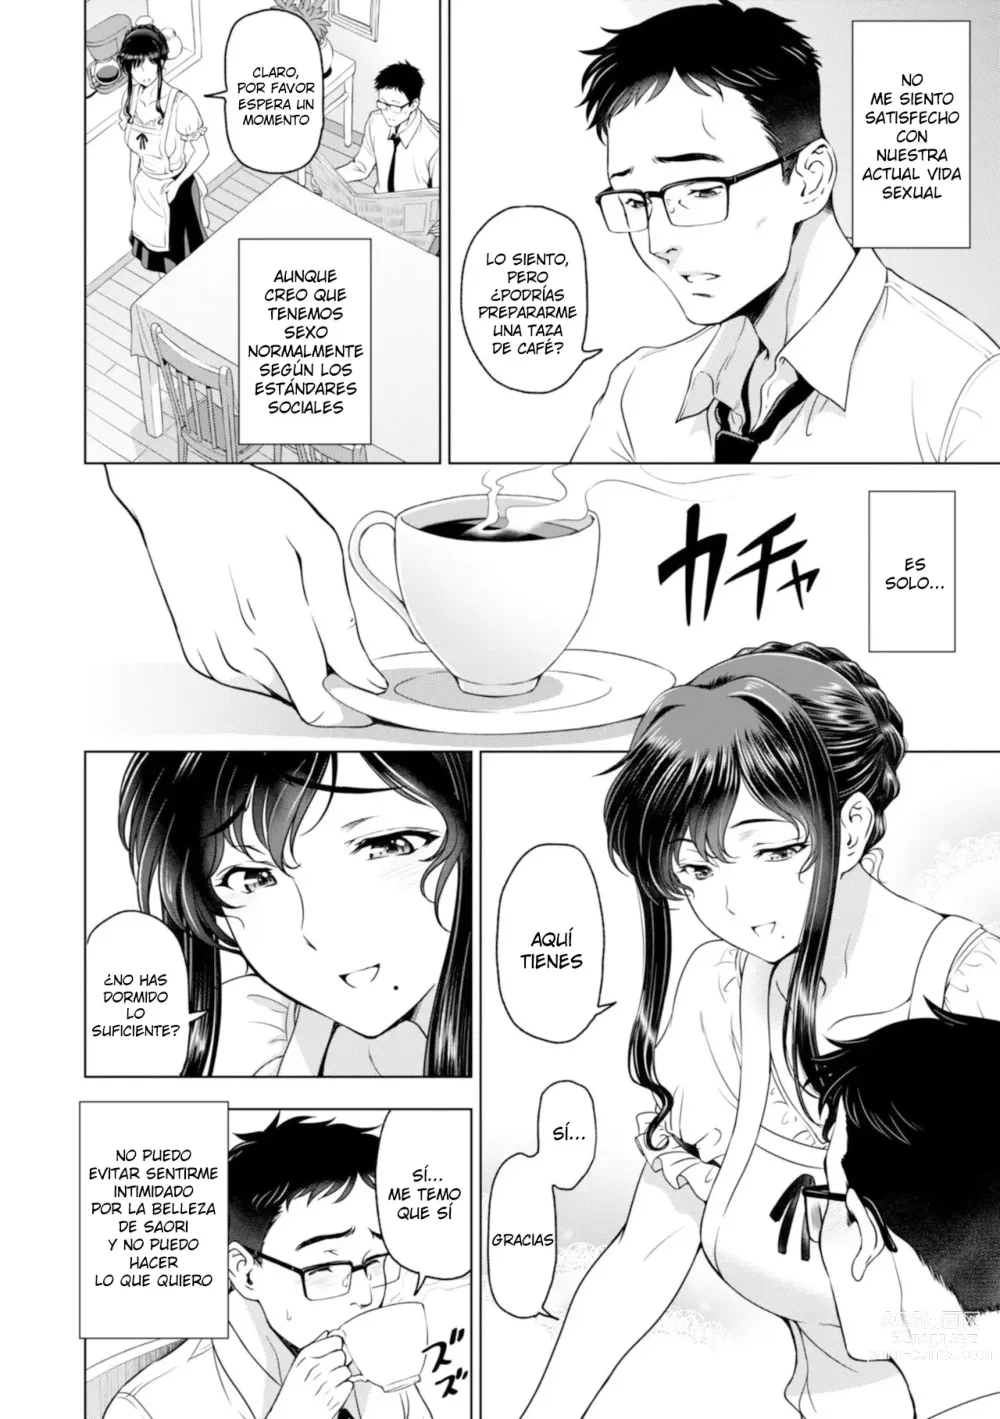 Page 2 of manga Nettori Netorare Ep.4 ~Esposa . El caso de Saori Sudou (epílogo)~